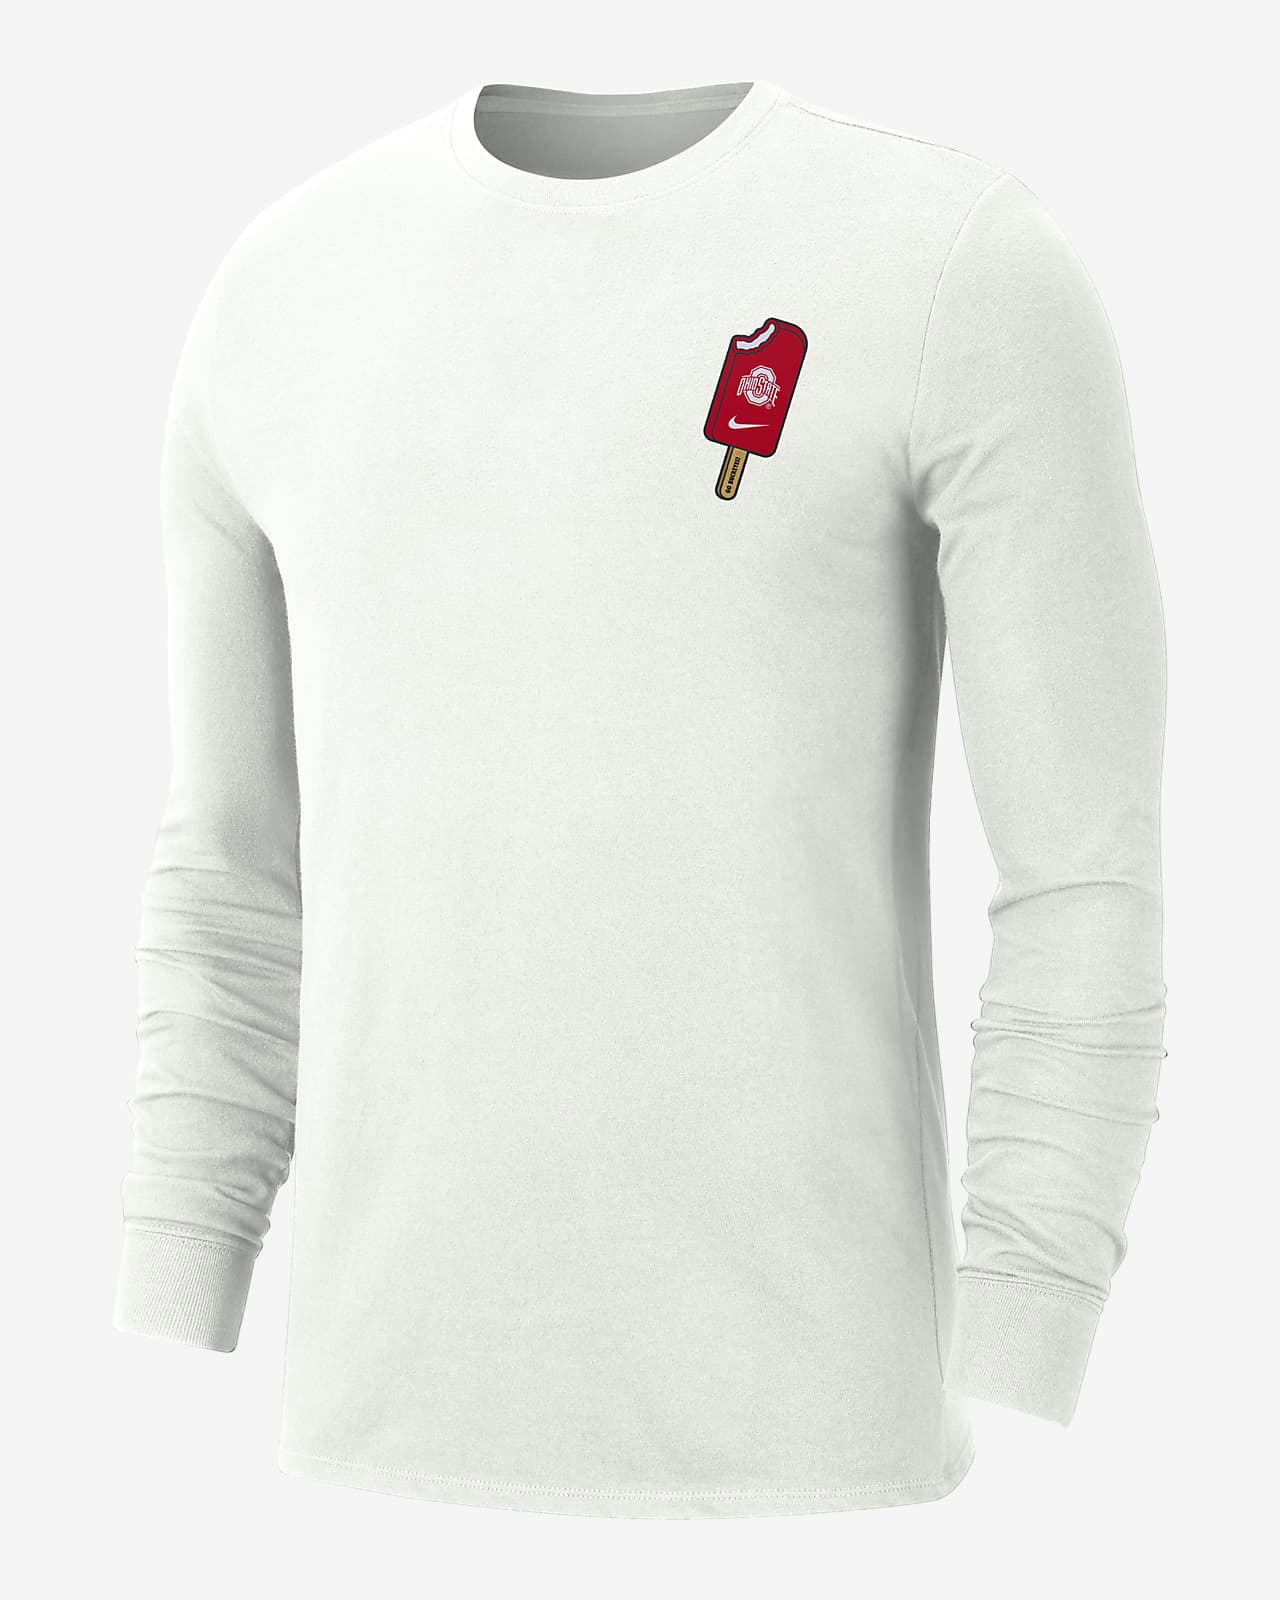 Ohio State Men's Nike College Long-Sleeve T-Shirt